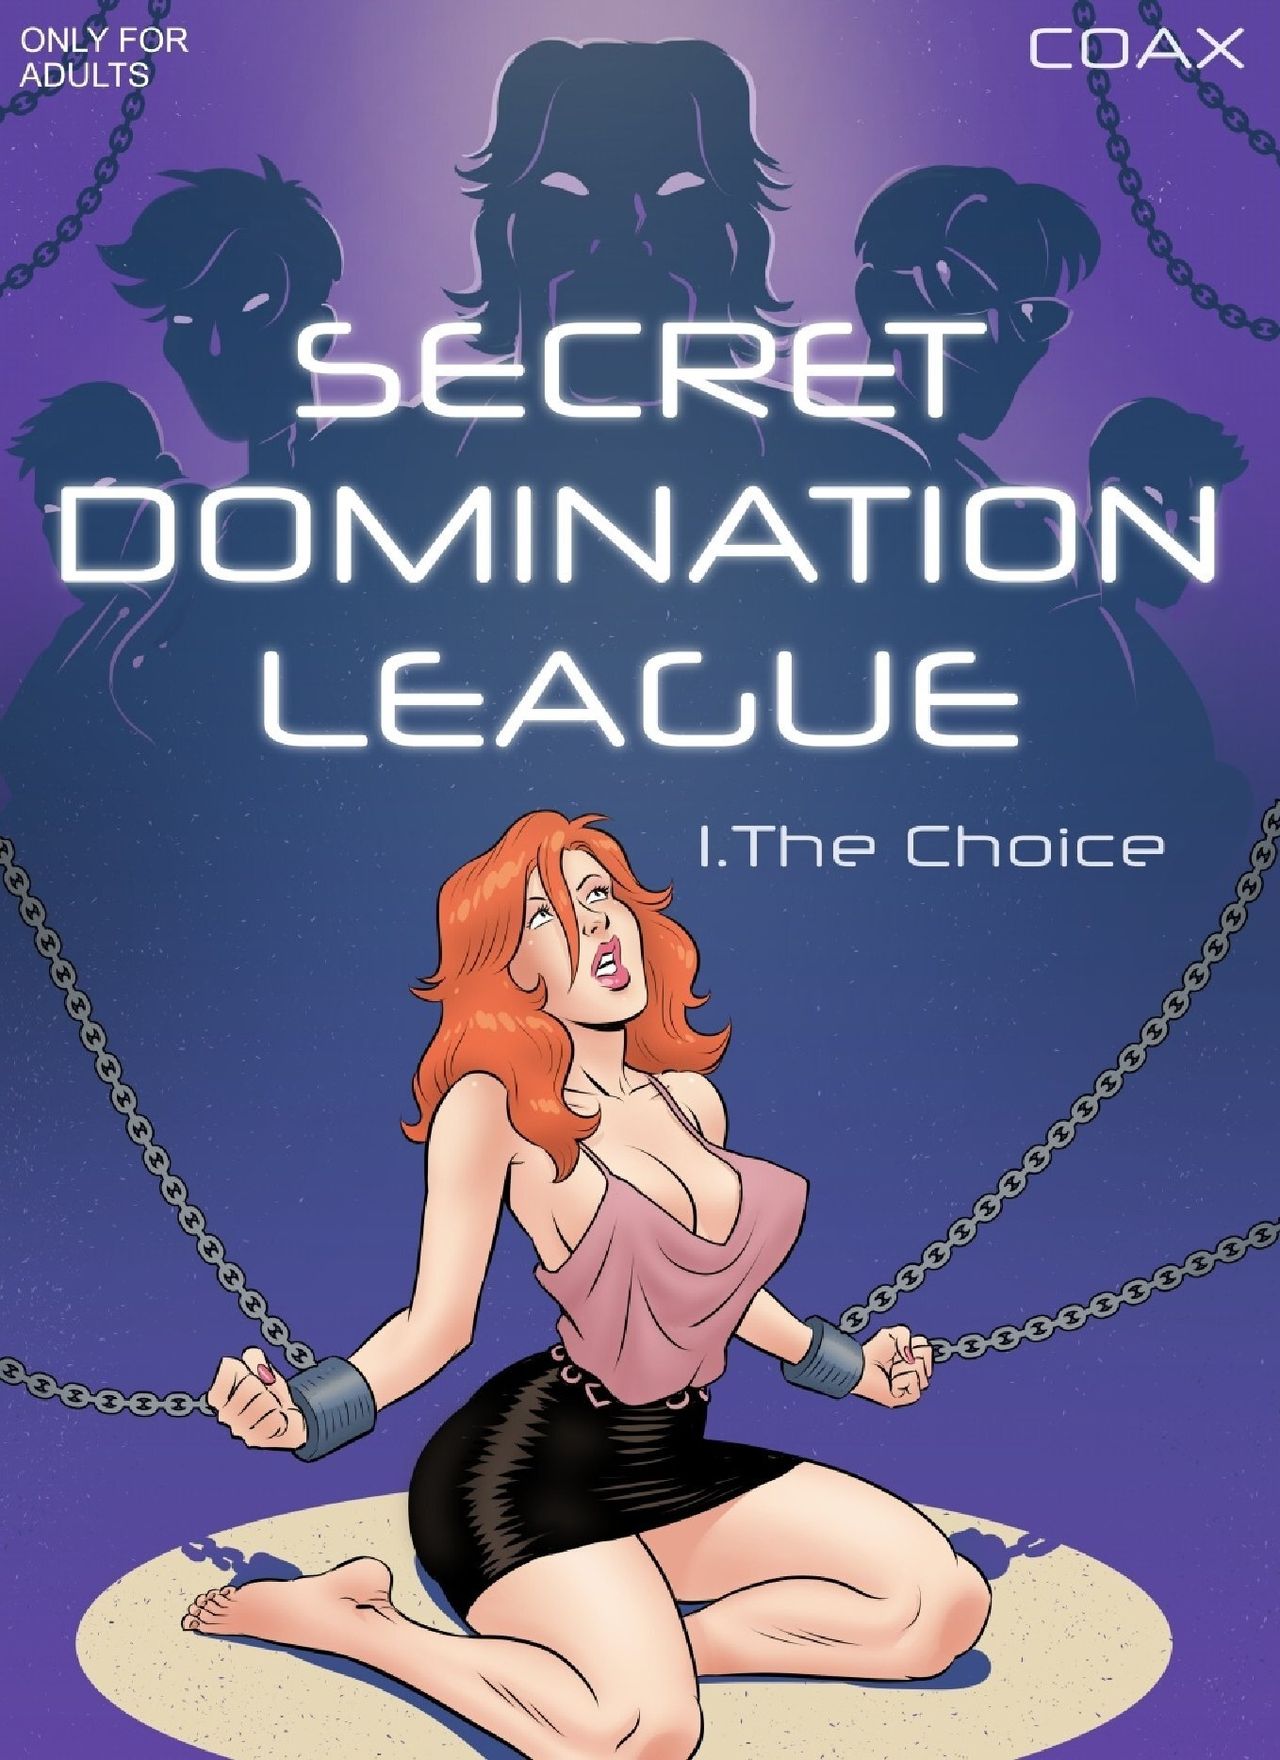 Shemale Dominatrix Cartoons - Secret Domination League 1- The Choice by Coax - Porn Cartoon Comics